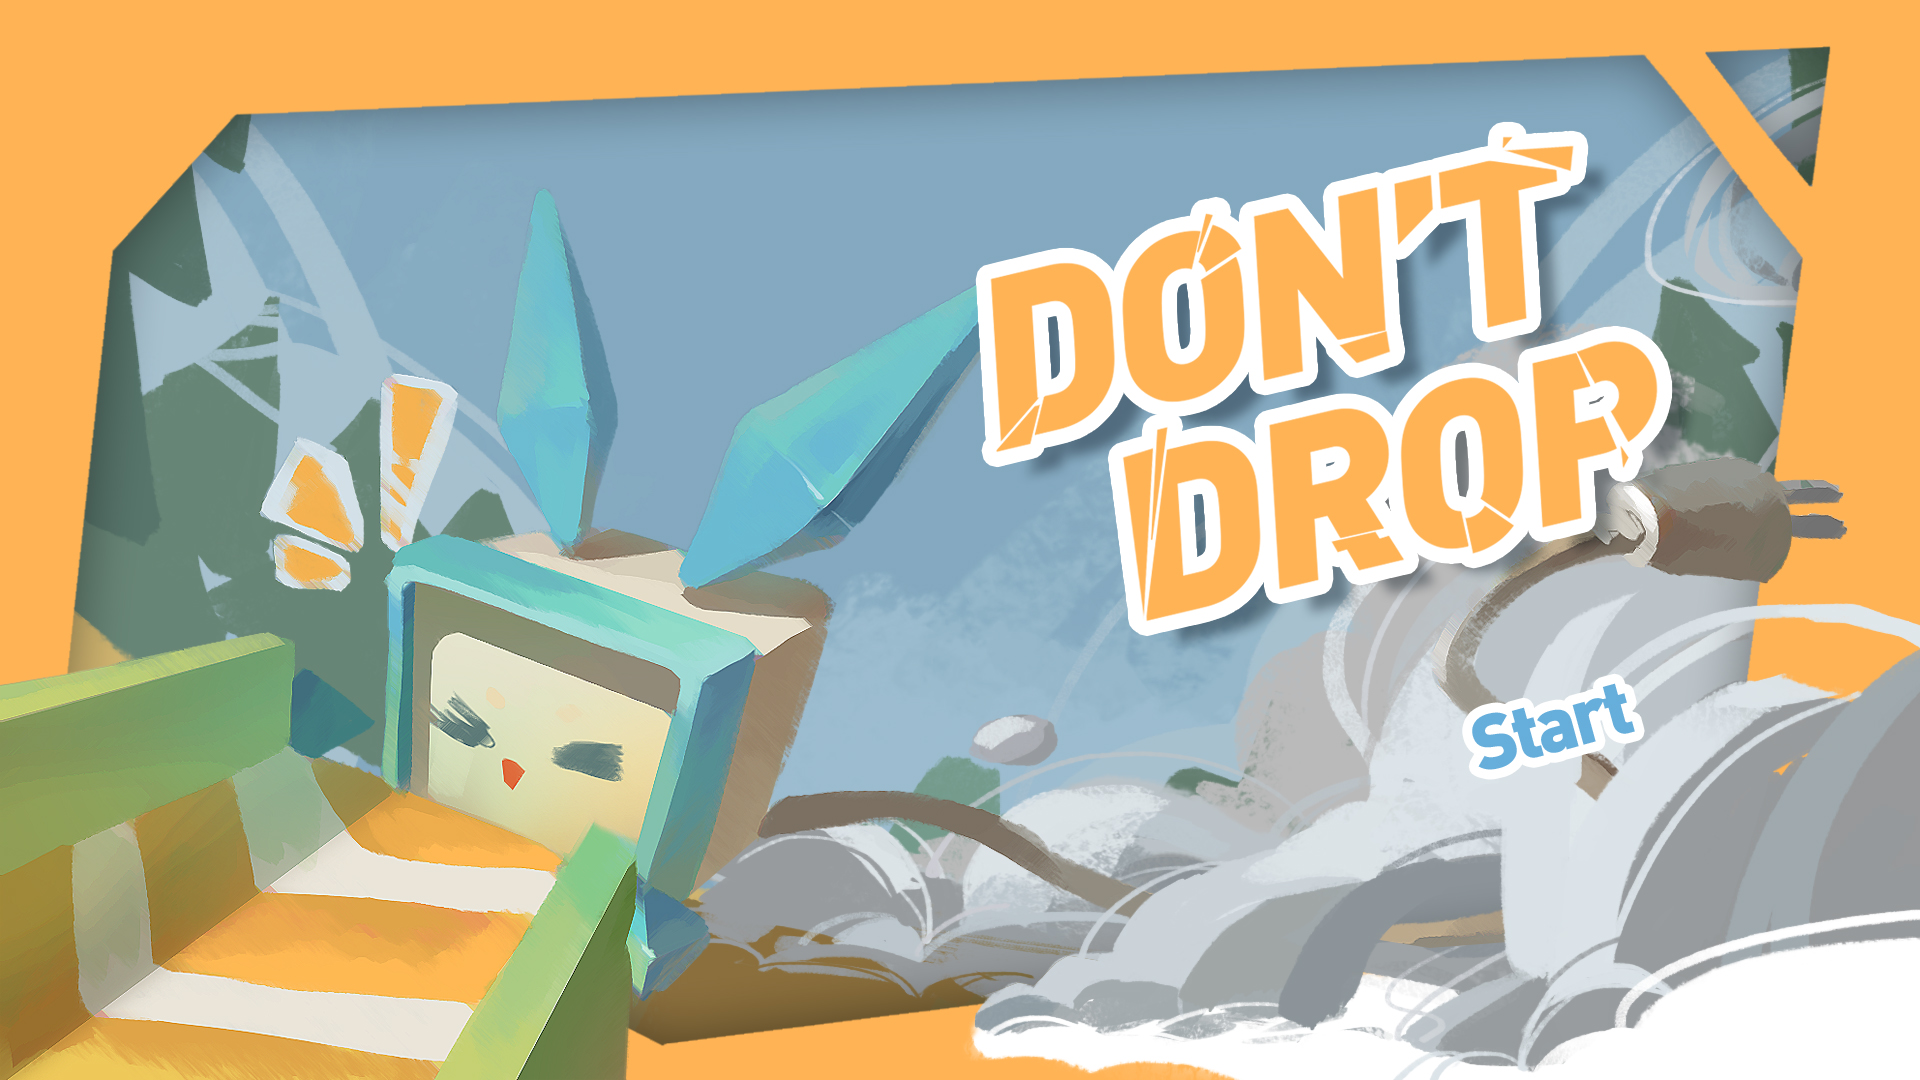 Don't Drop